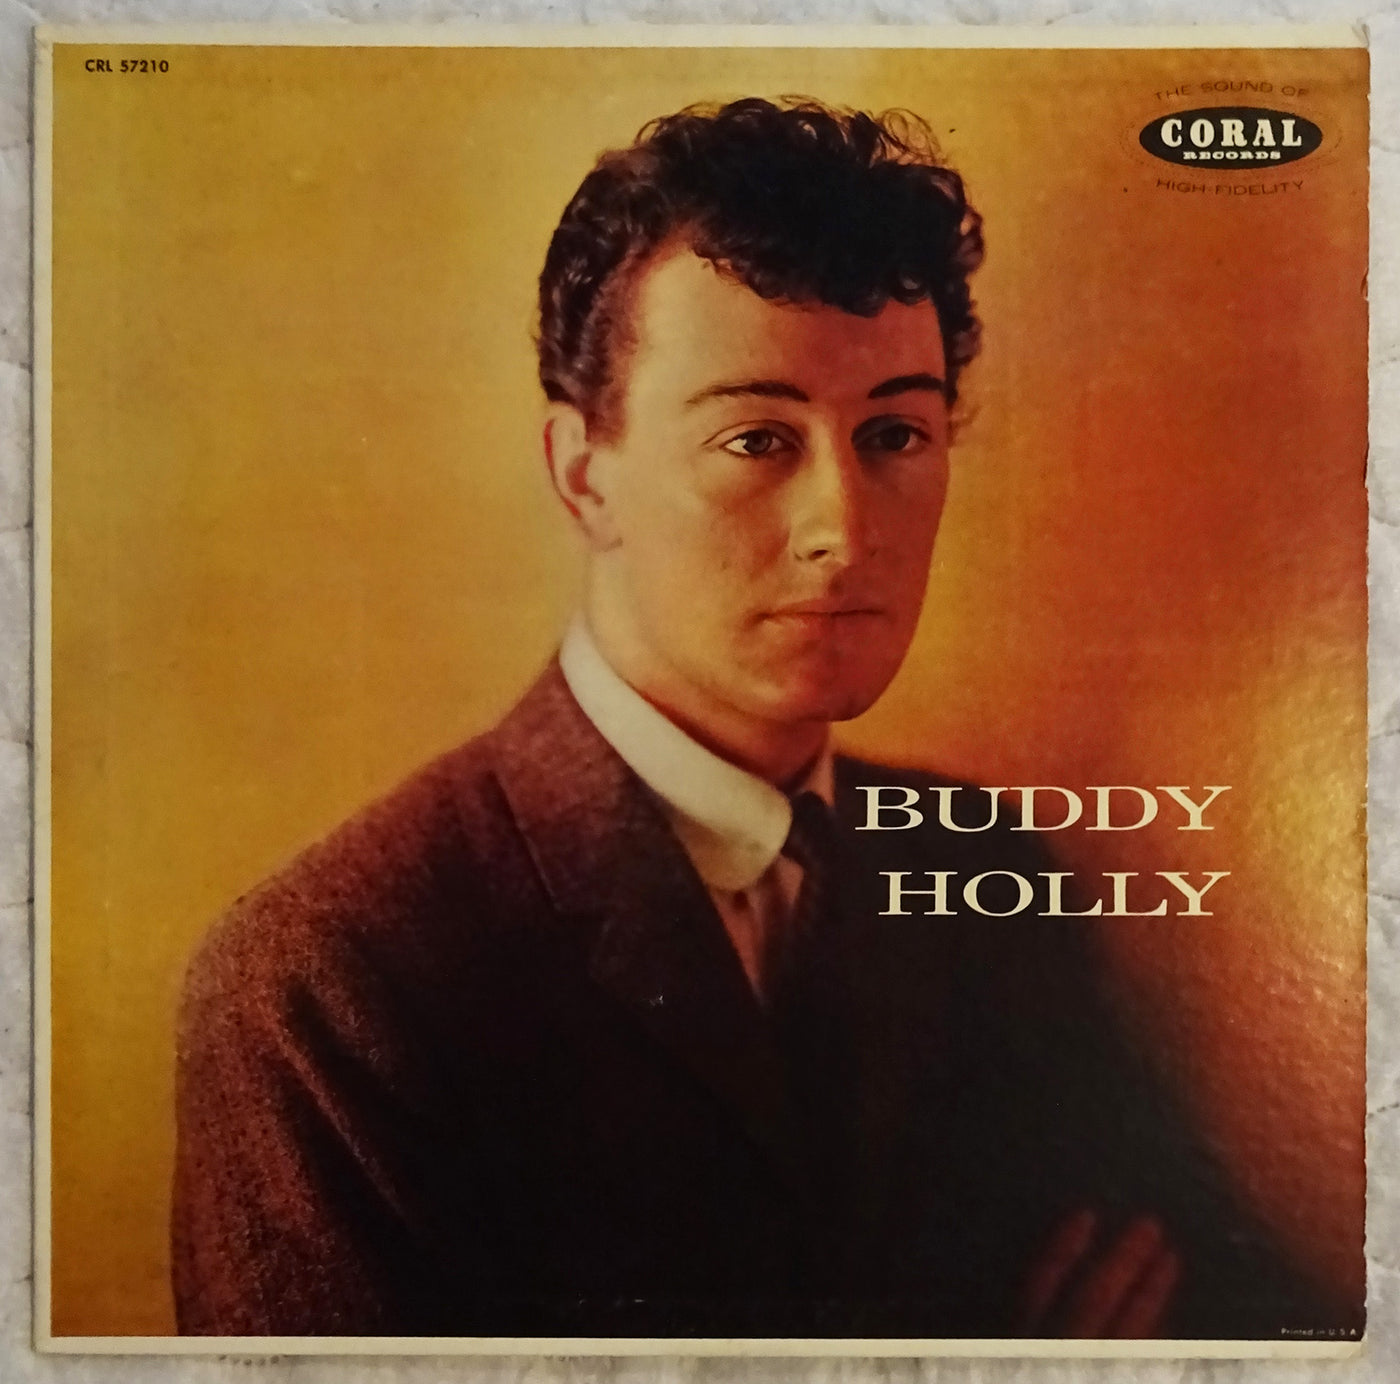 Buddy Holly Self Titled Album Vinyl Record 33rpm CRL 57210